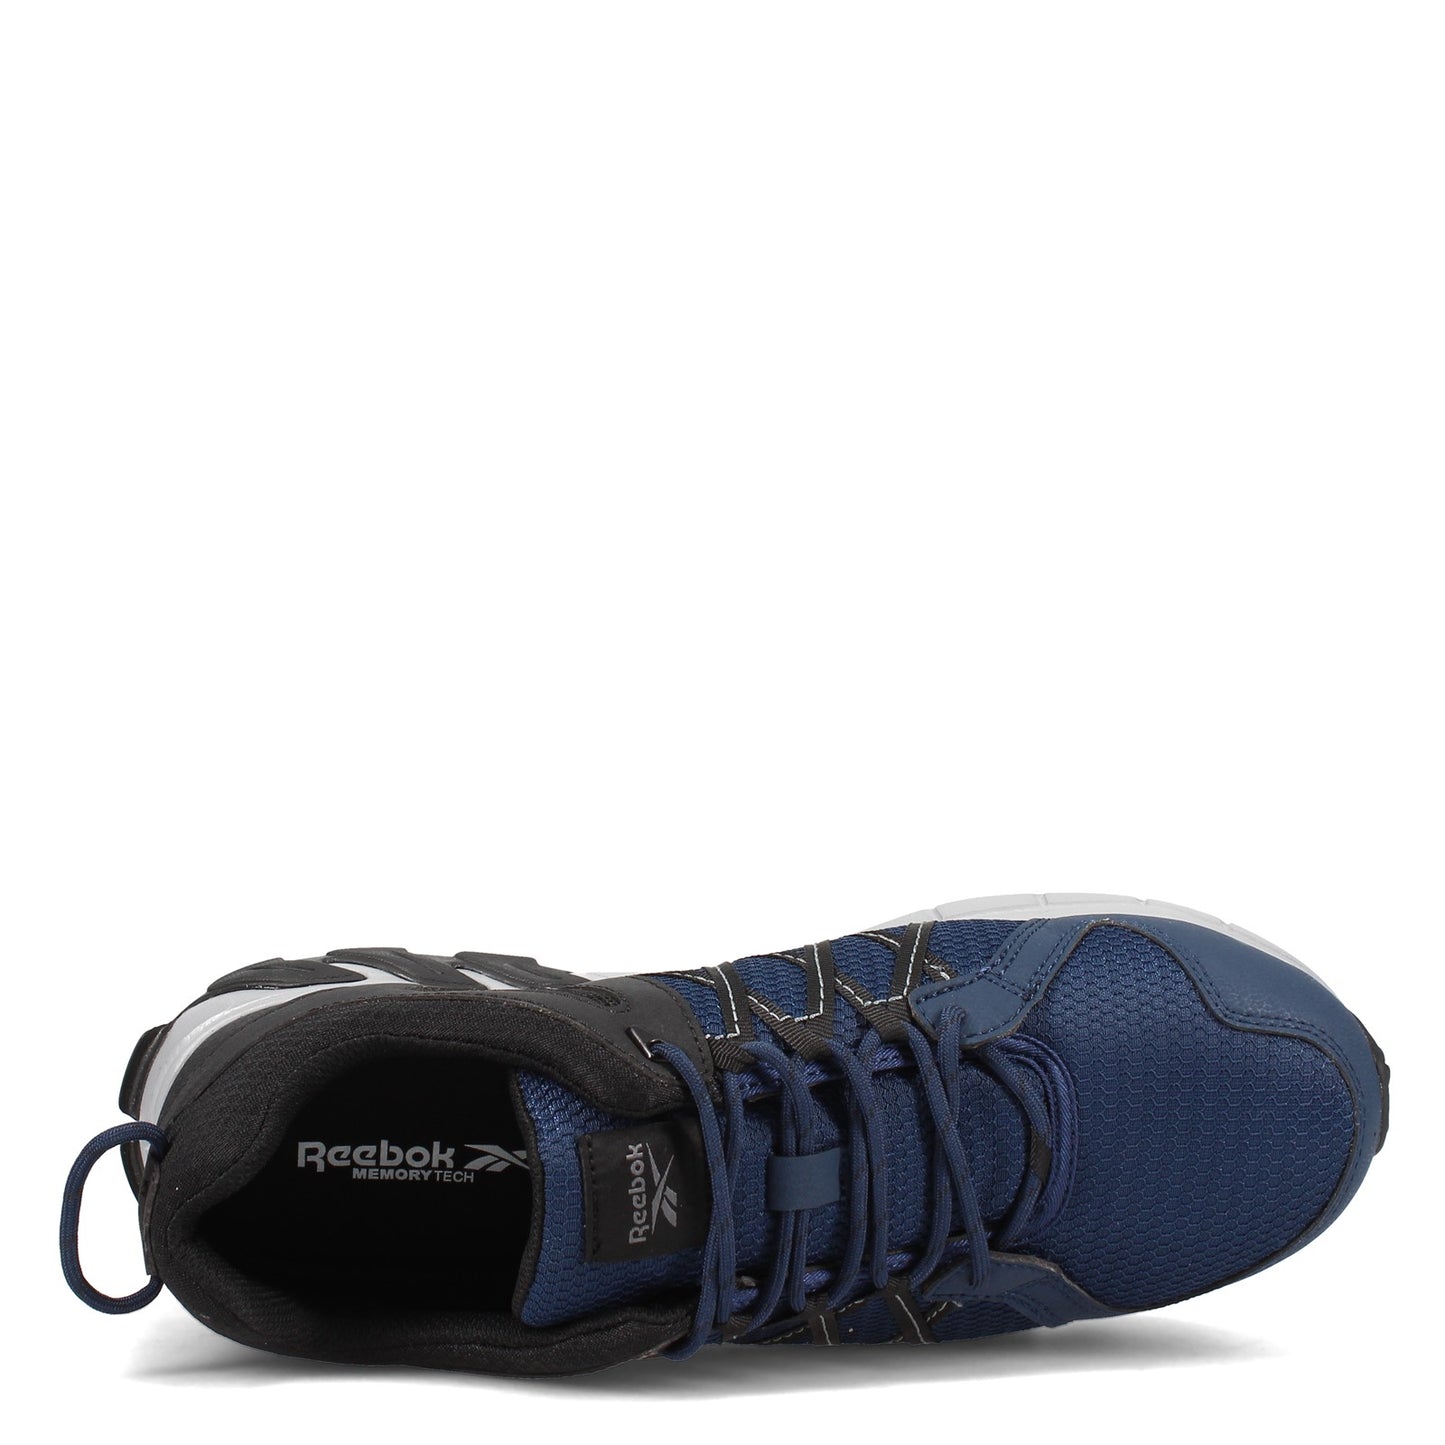 Peltz Shoes  Men's Reebok Work Trail Grip Low Work Shoe Navy/Black/Grey RB3403